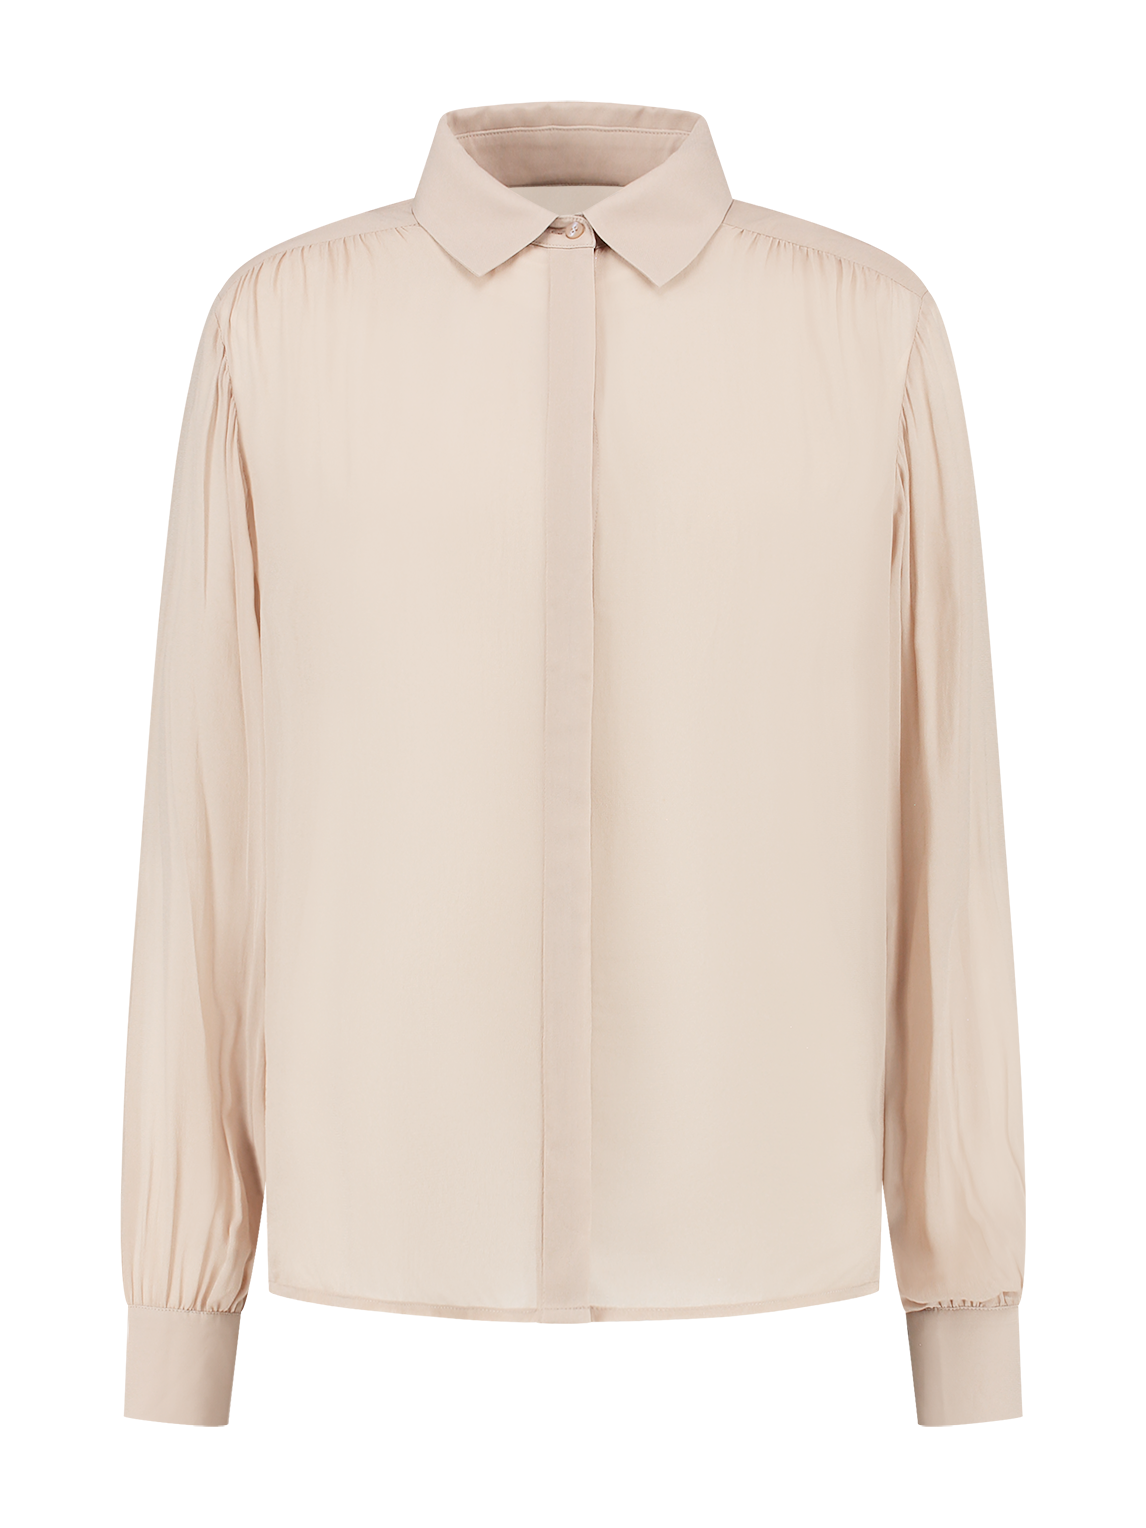 Semitransparent blouse with regular fit 